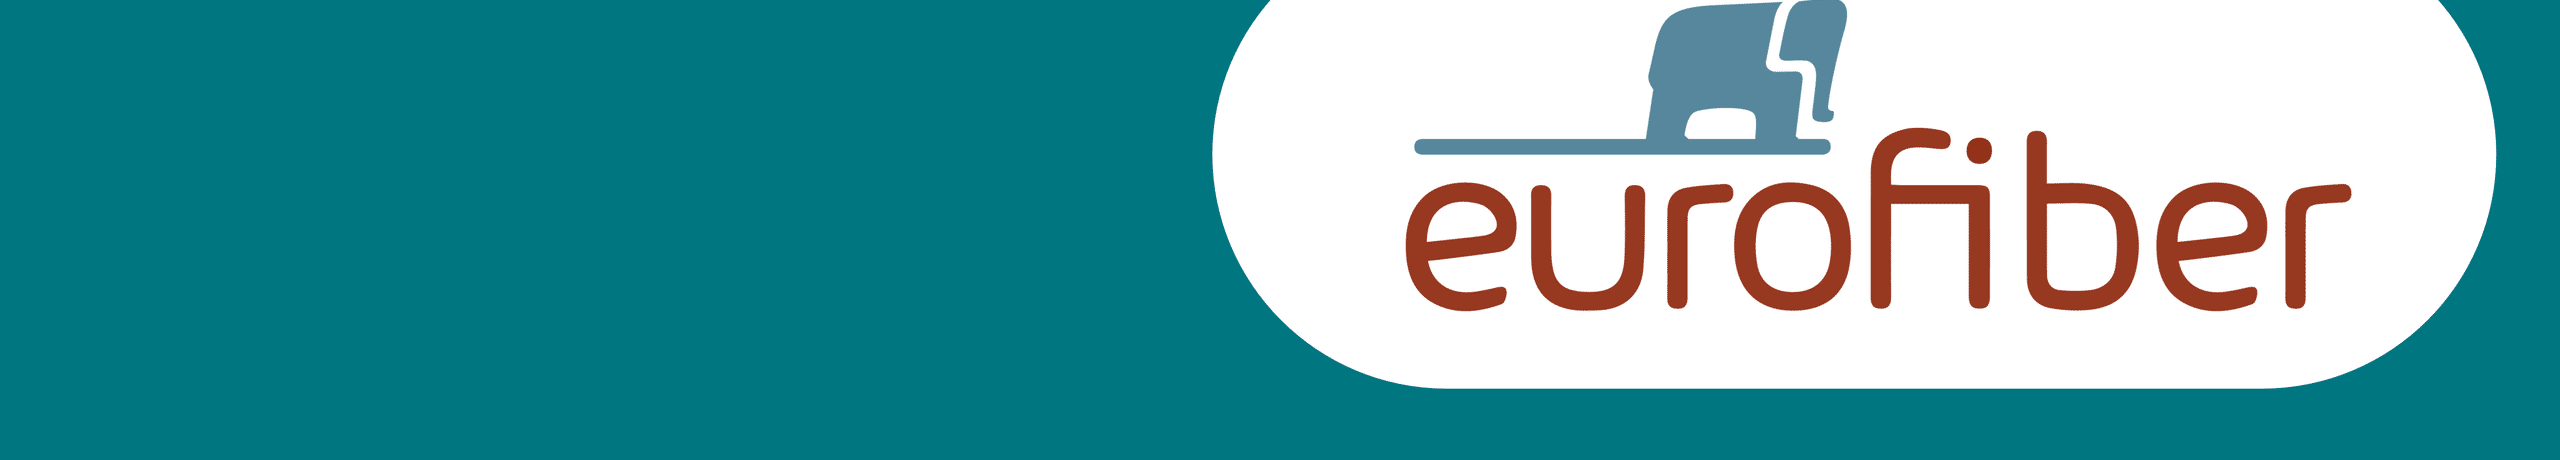 Logo Eurofiber